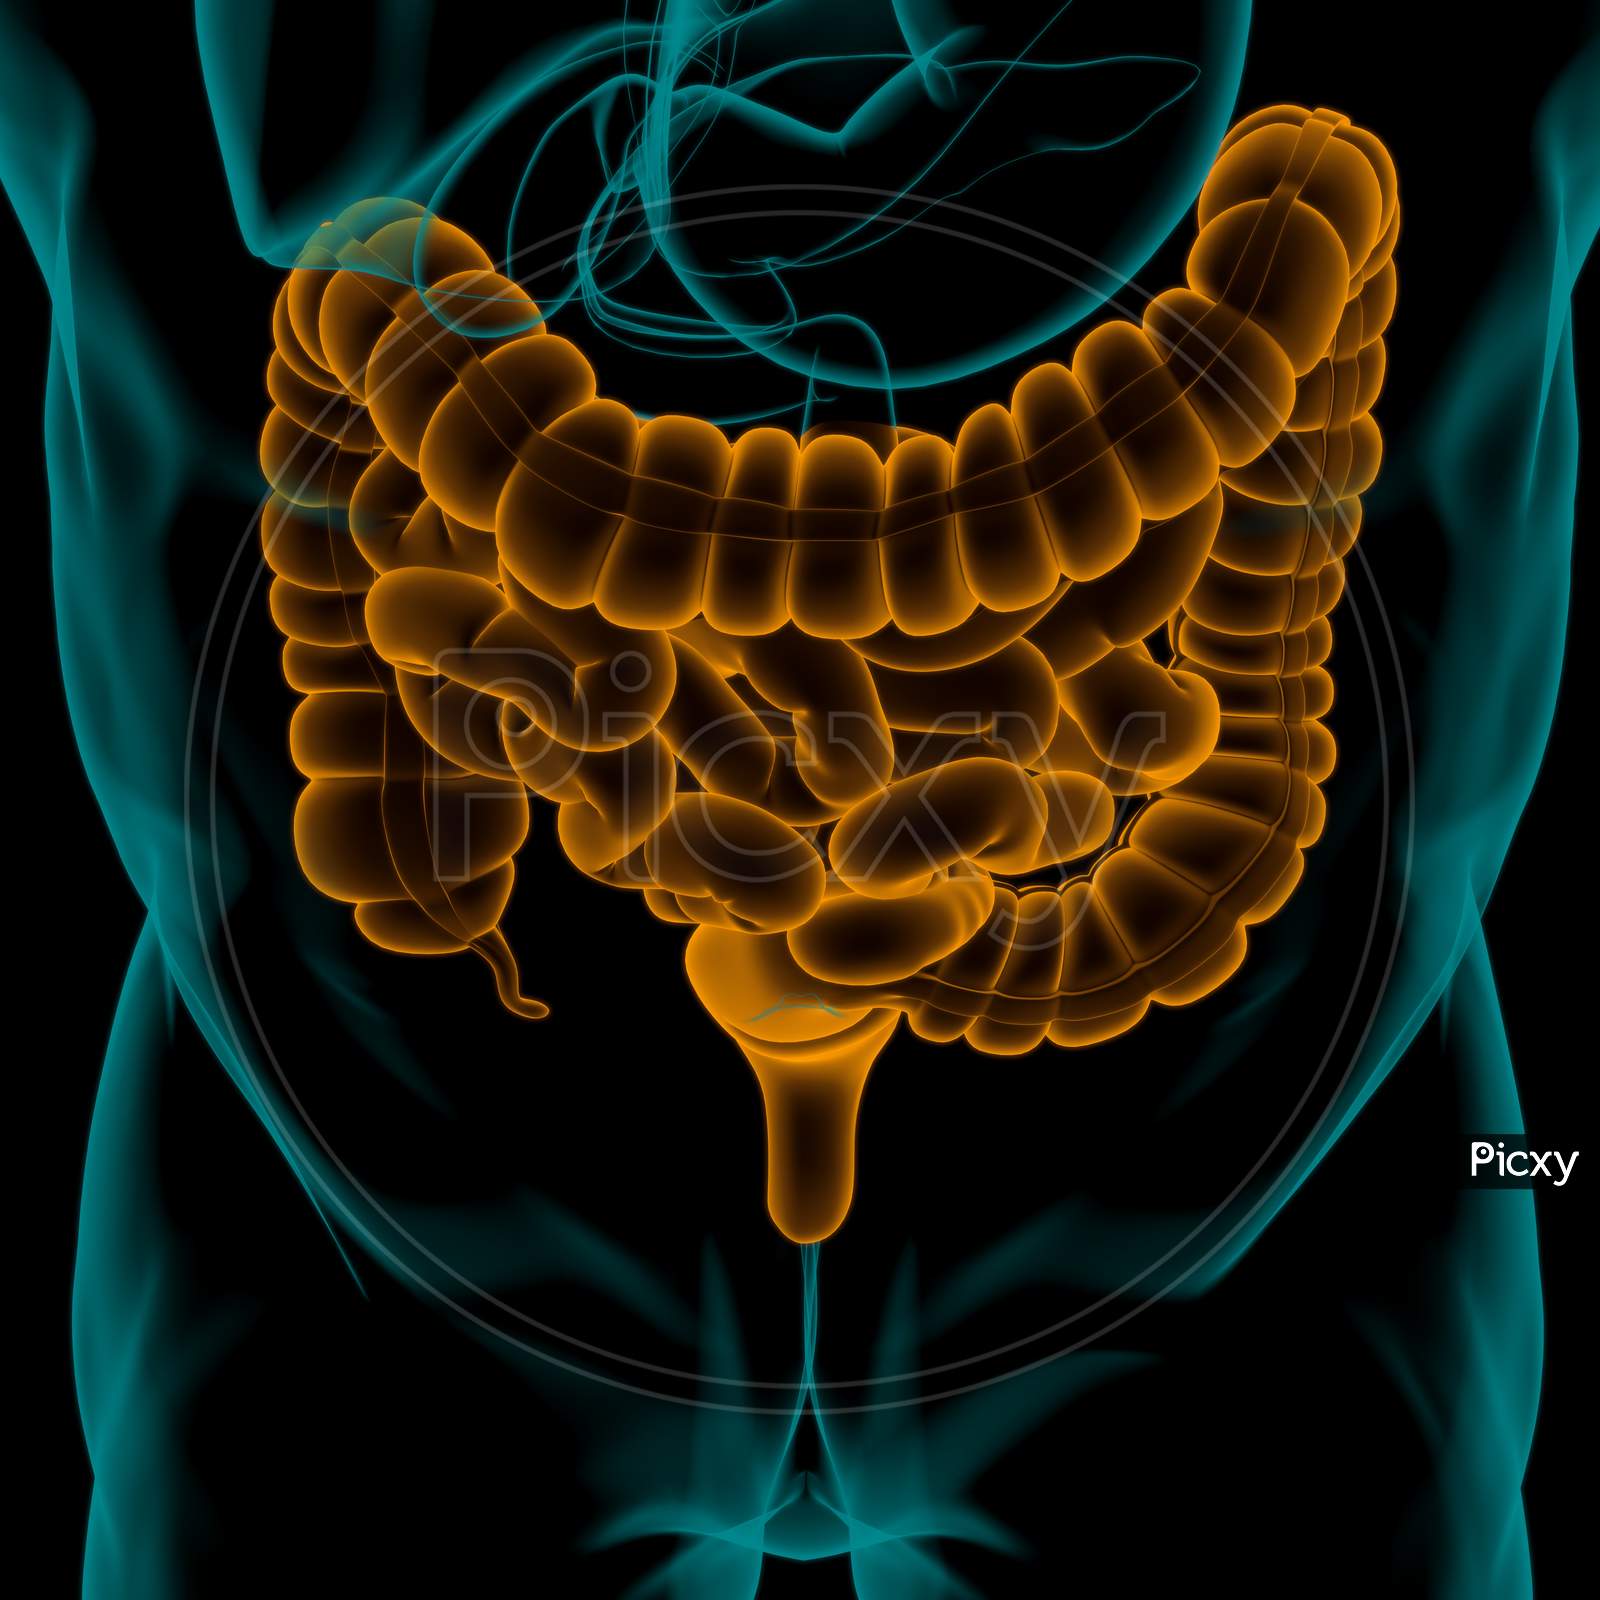 Small And Large Intestine 3D Illustration Human Digestive System Anatomy